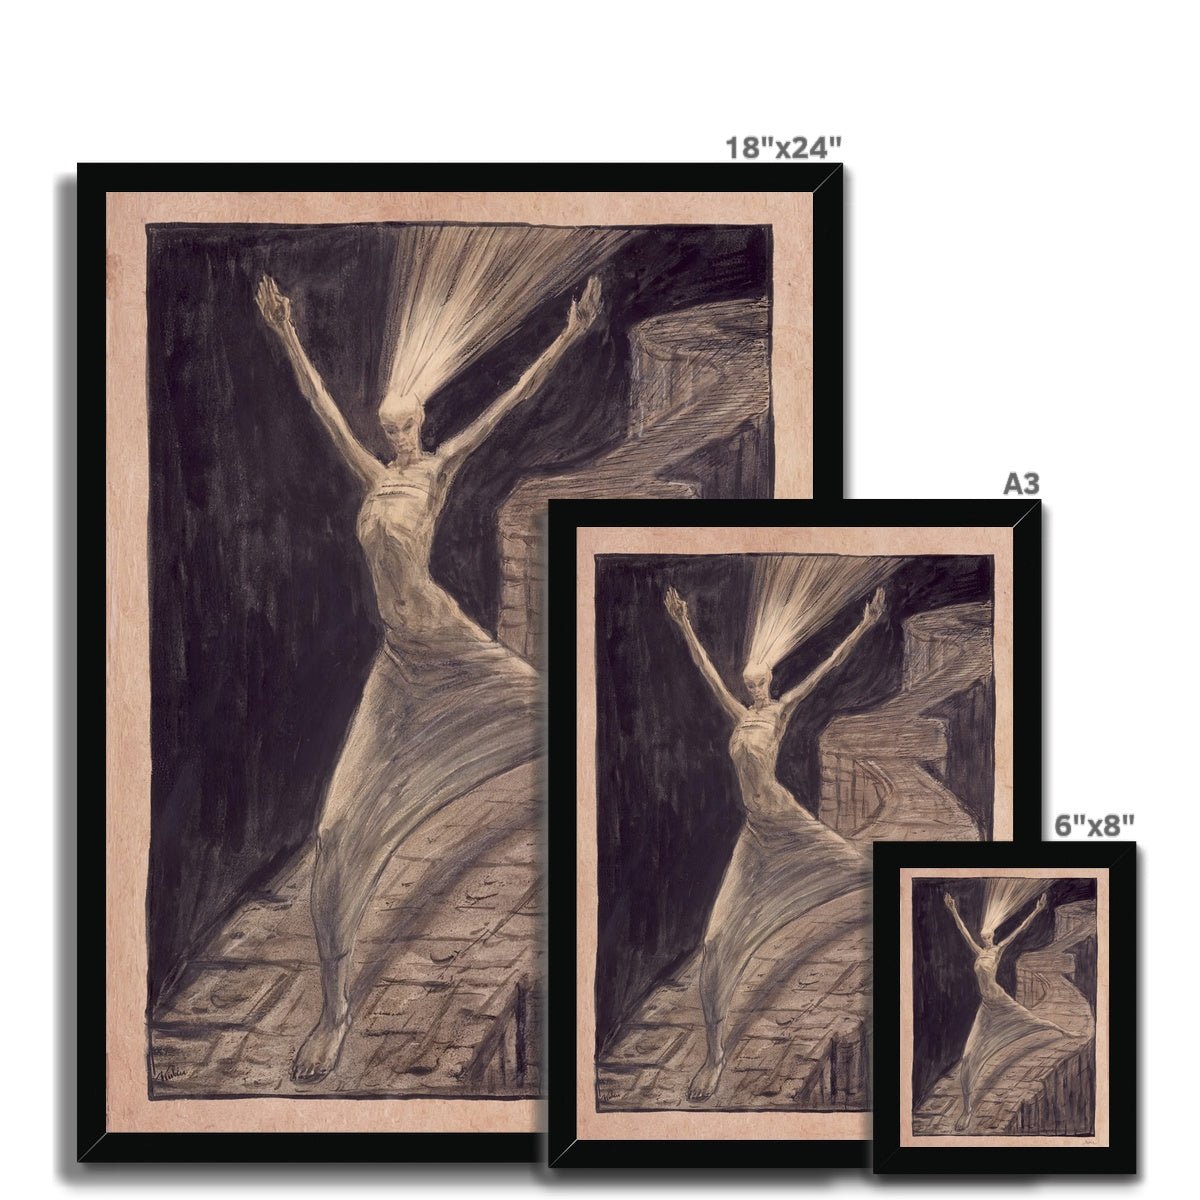 Framed Print 6"x8" / Black Frame Alfred Kubin: God of Light | Antique Symbolist Surrealist | Gothic Home Decor | Dark Fantasy Occult Mystic Pagan Magick Framed Art Print